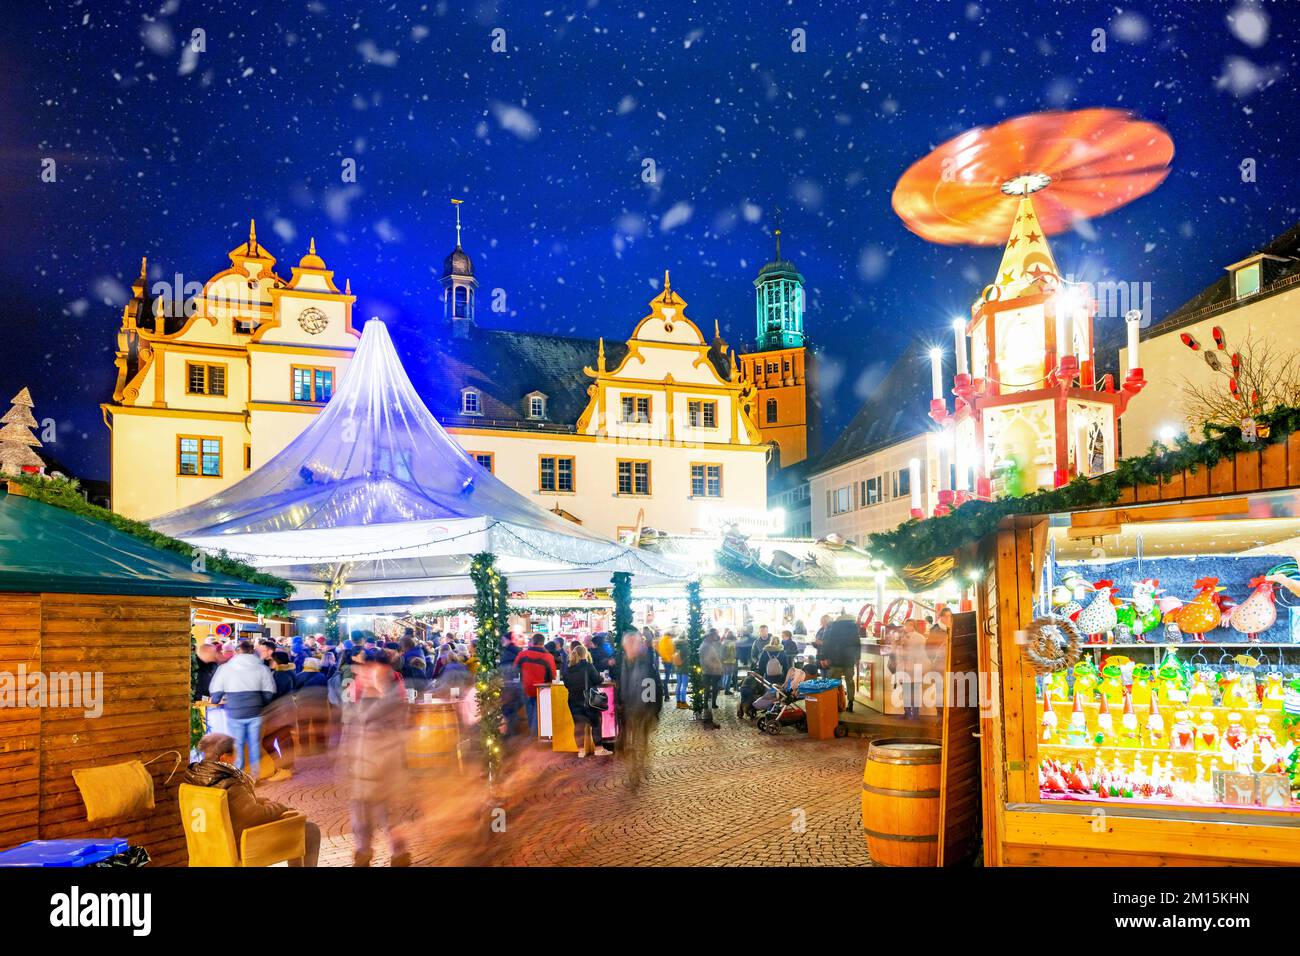 Christmas Market in Darmstadt, Germany Stock Photo